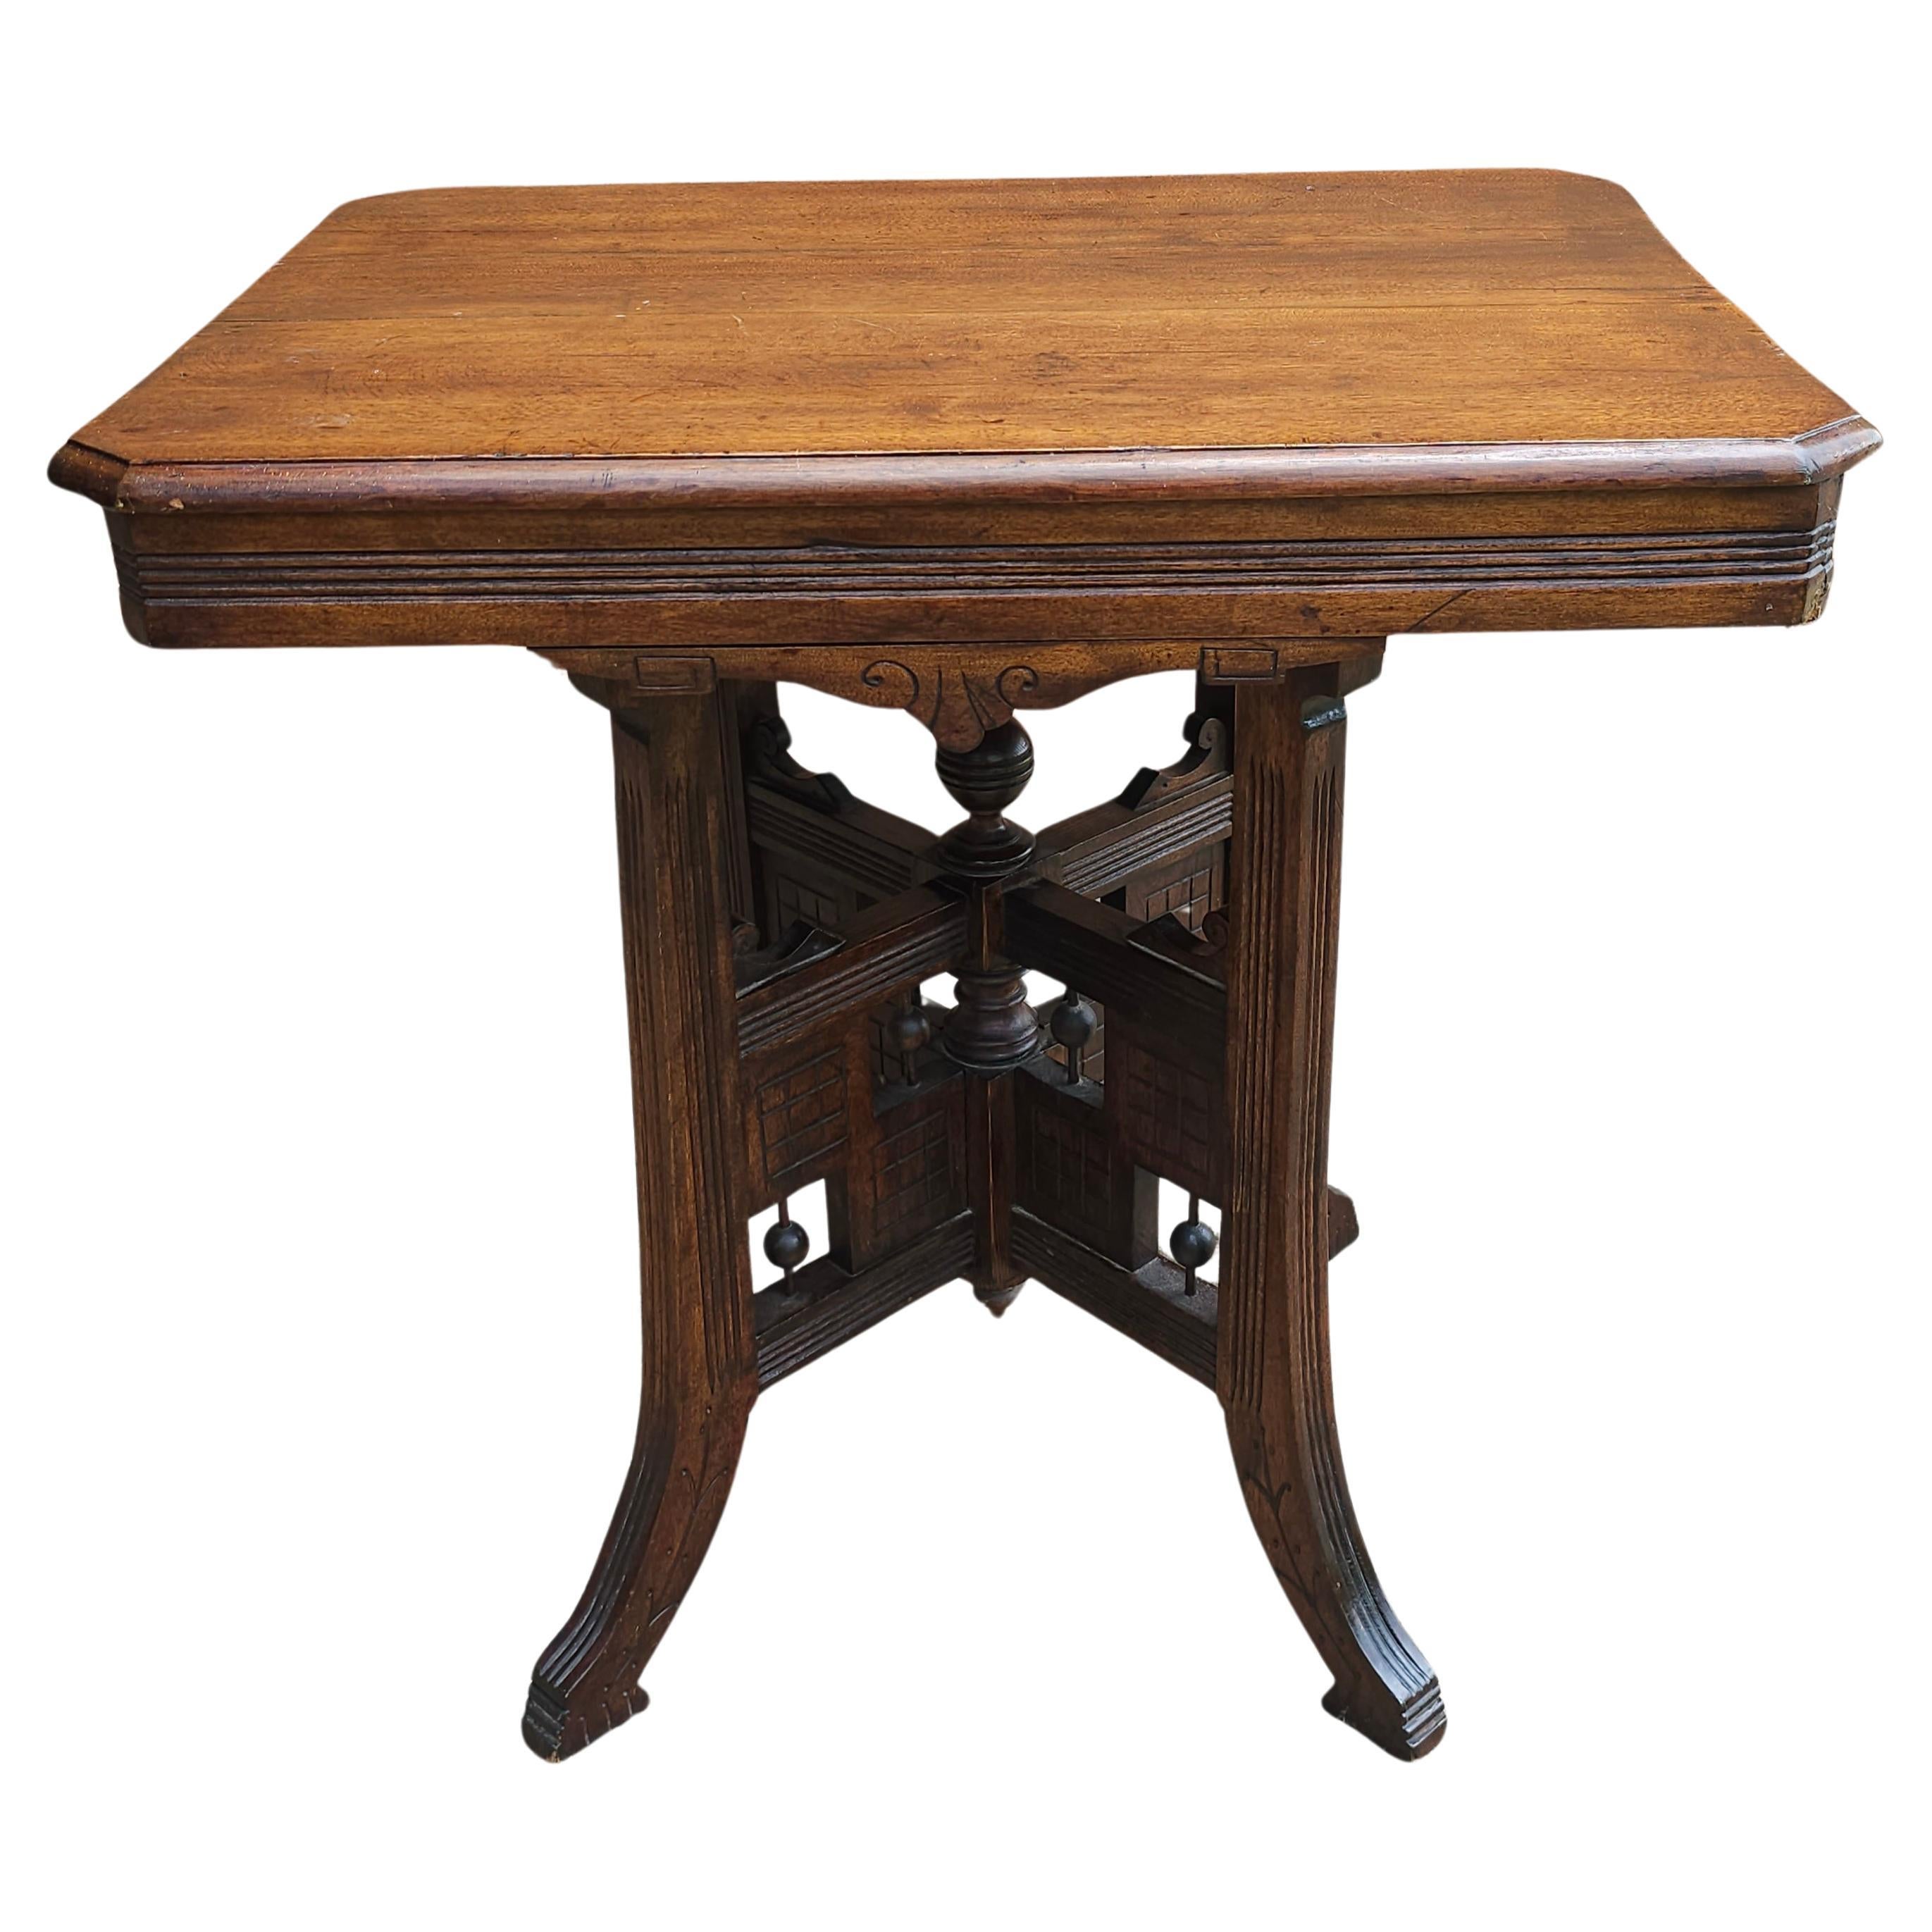 A 19th Century Victorian Mahogany Rectangular Center Table measuring 30